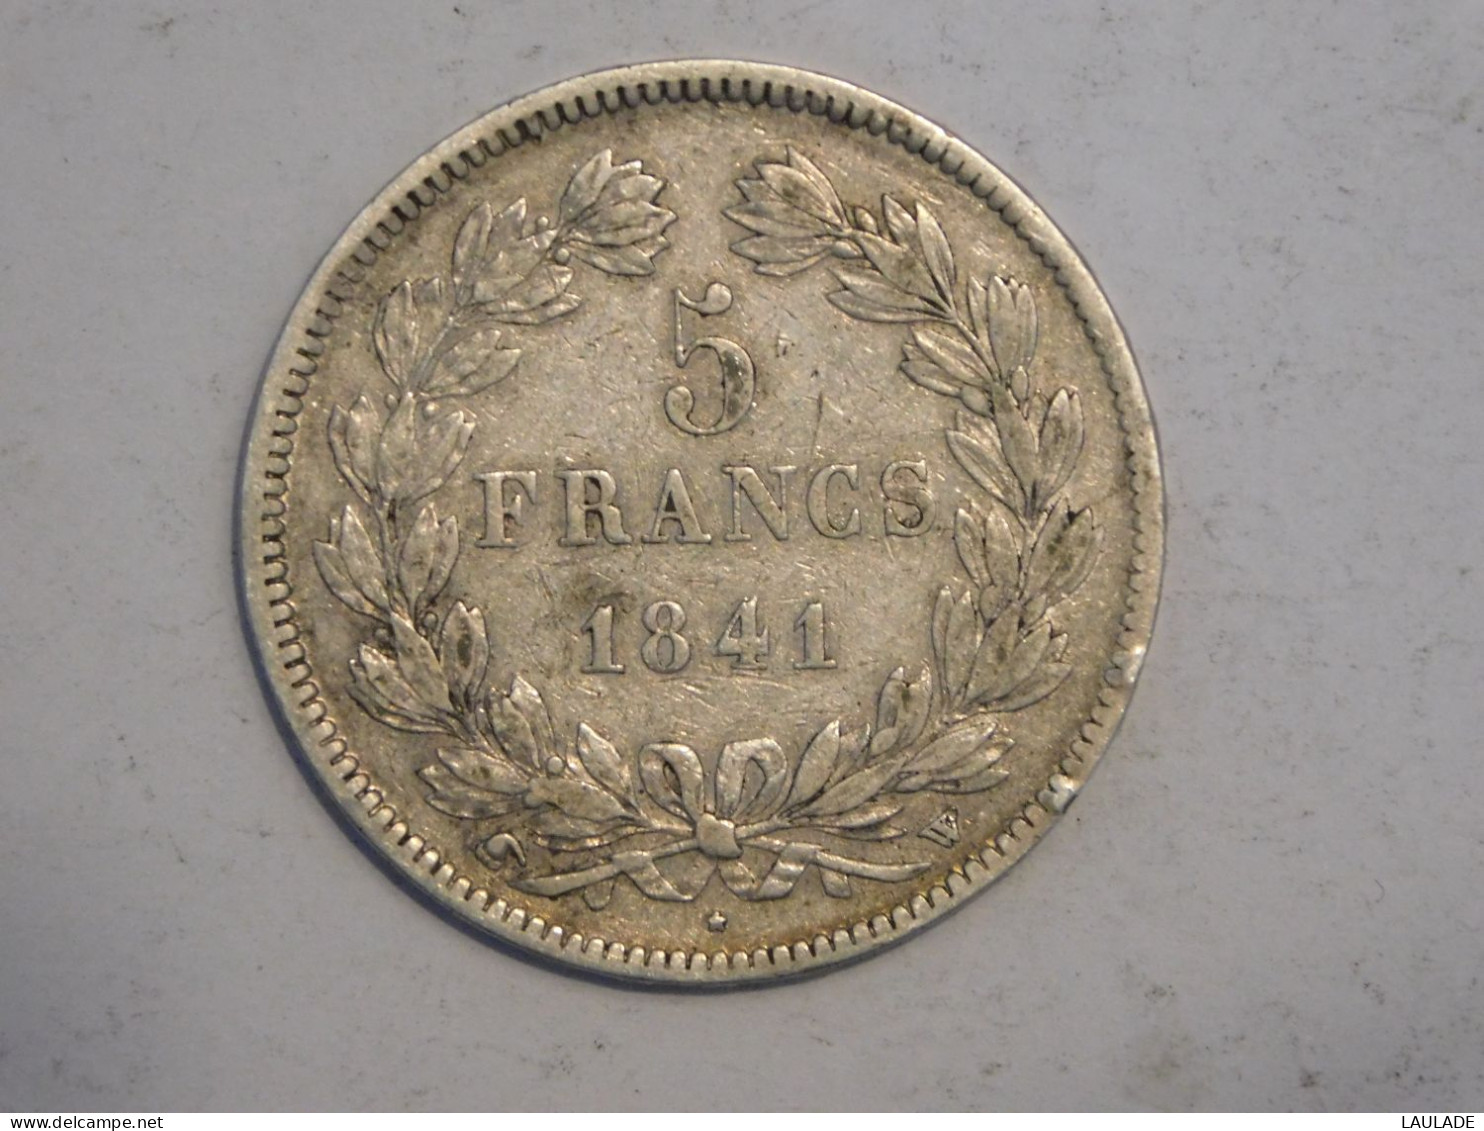 FRANCE 5 Francs 1841 W - Silver, Argent Franc - 5 Francs